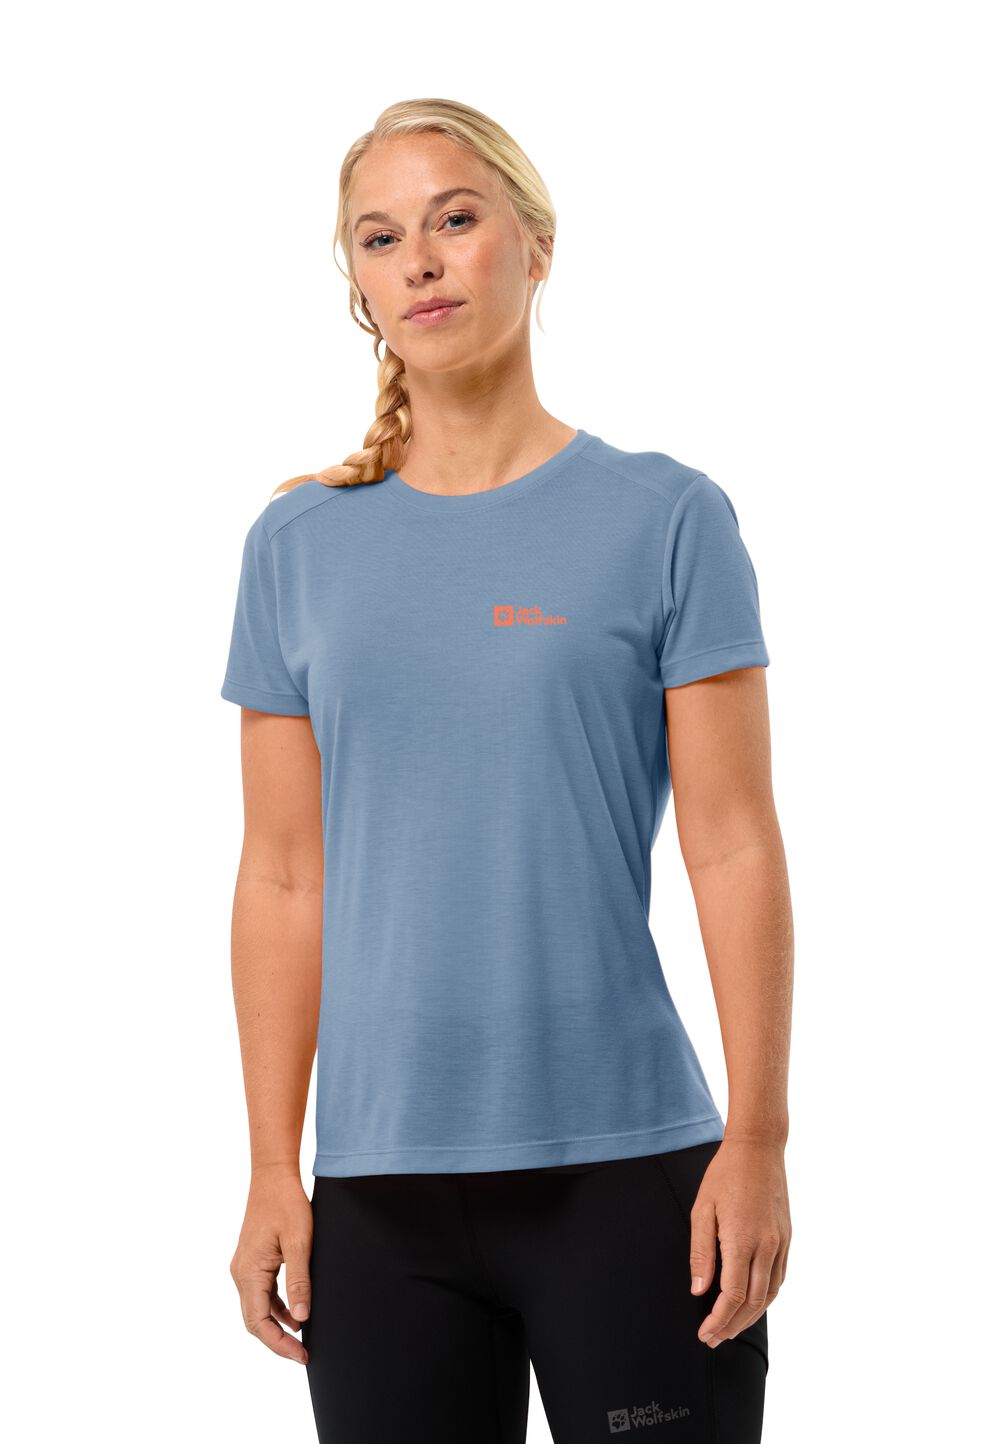 Jack Wolfskin Vonnan S S T-Shirt Women Functioneel shirt Dames L elemental blue elemental blue